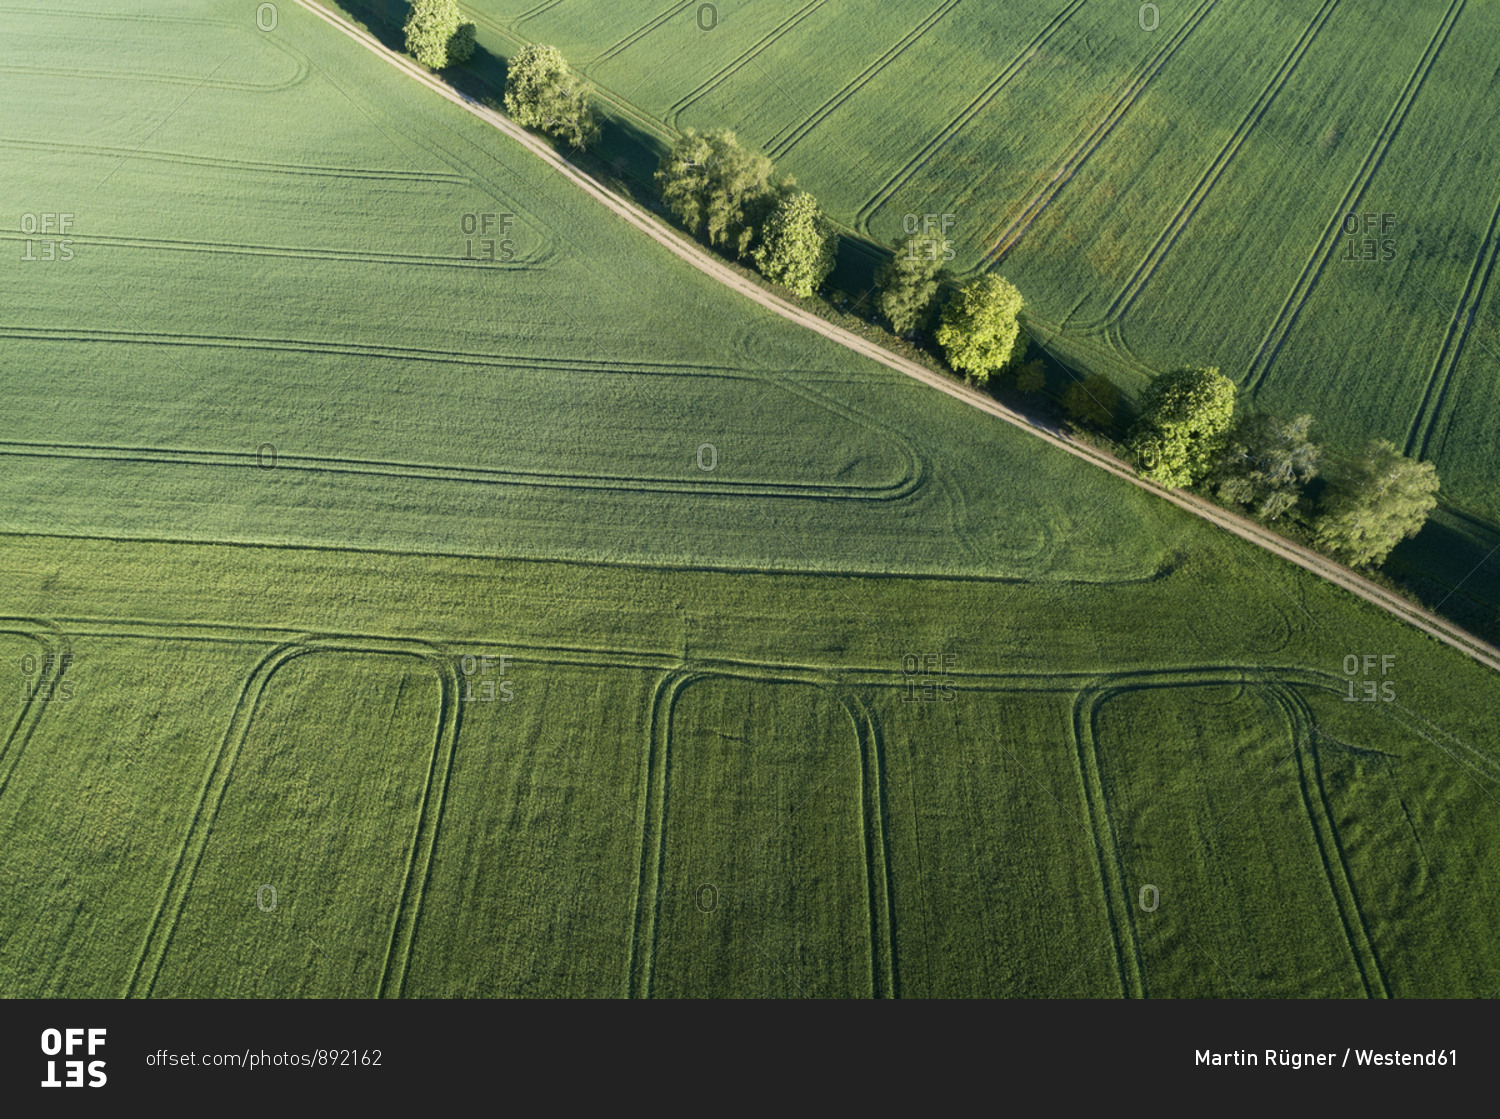 Germany- Mecklenburg-Western Pomerania- Aerial view of dirt road between green vast wheat fields in spring